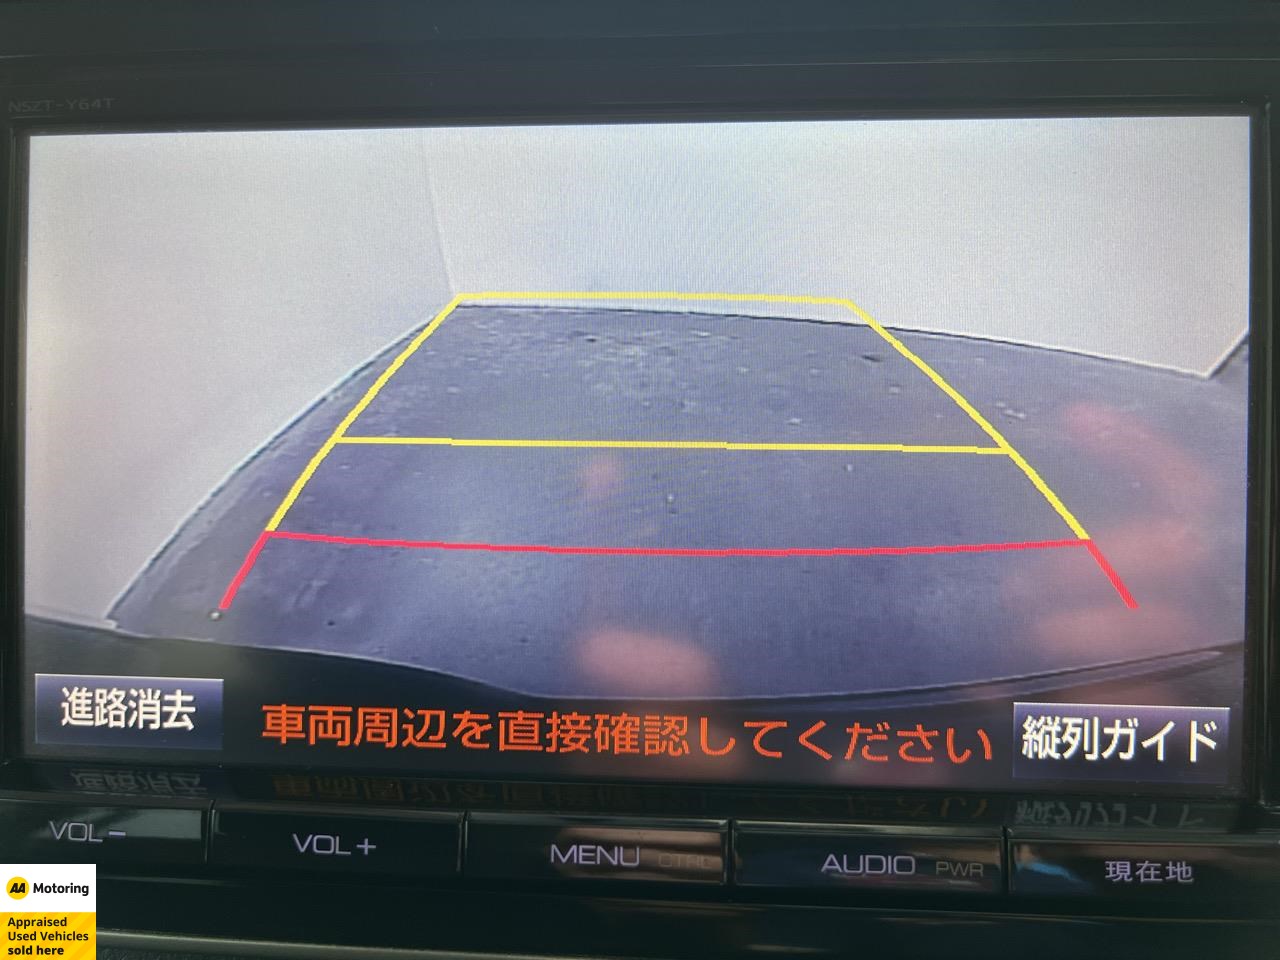 2014 Toyota Noah